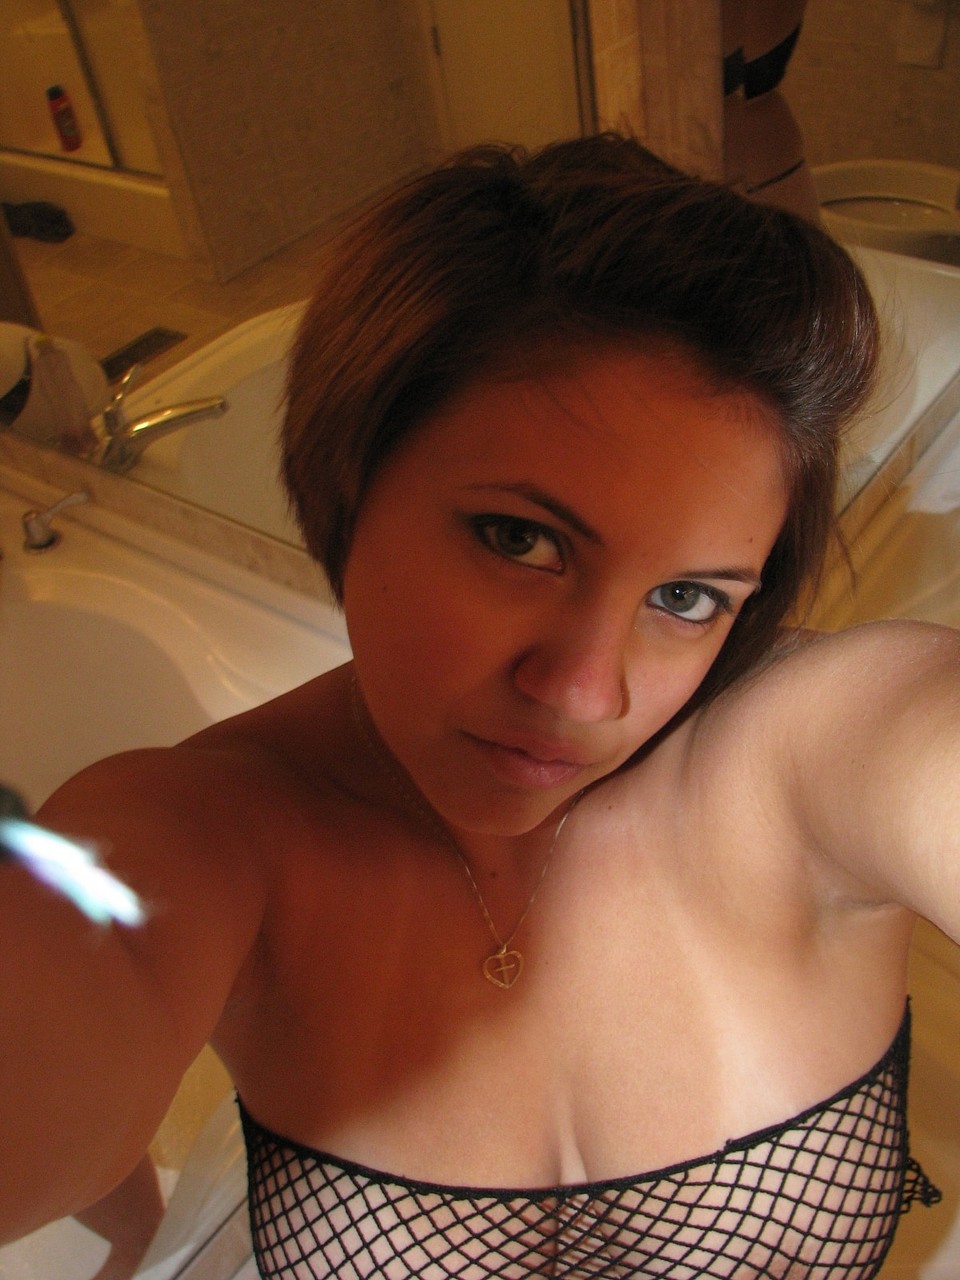 Sexy teen amateur shows off her big breasts while taking nude photos porno fotoğrafı #427315085 | Teen Girl Photos Pics, Amateur, mobil porno